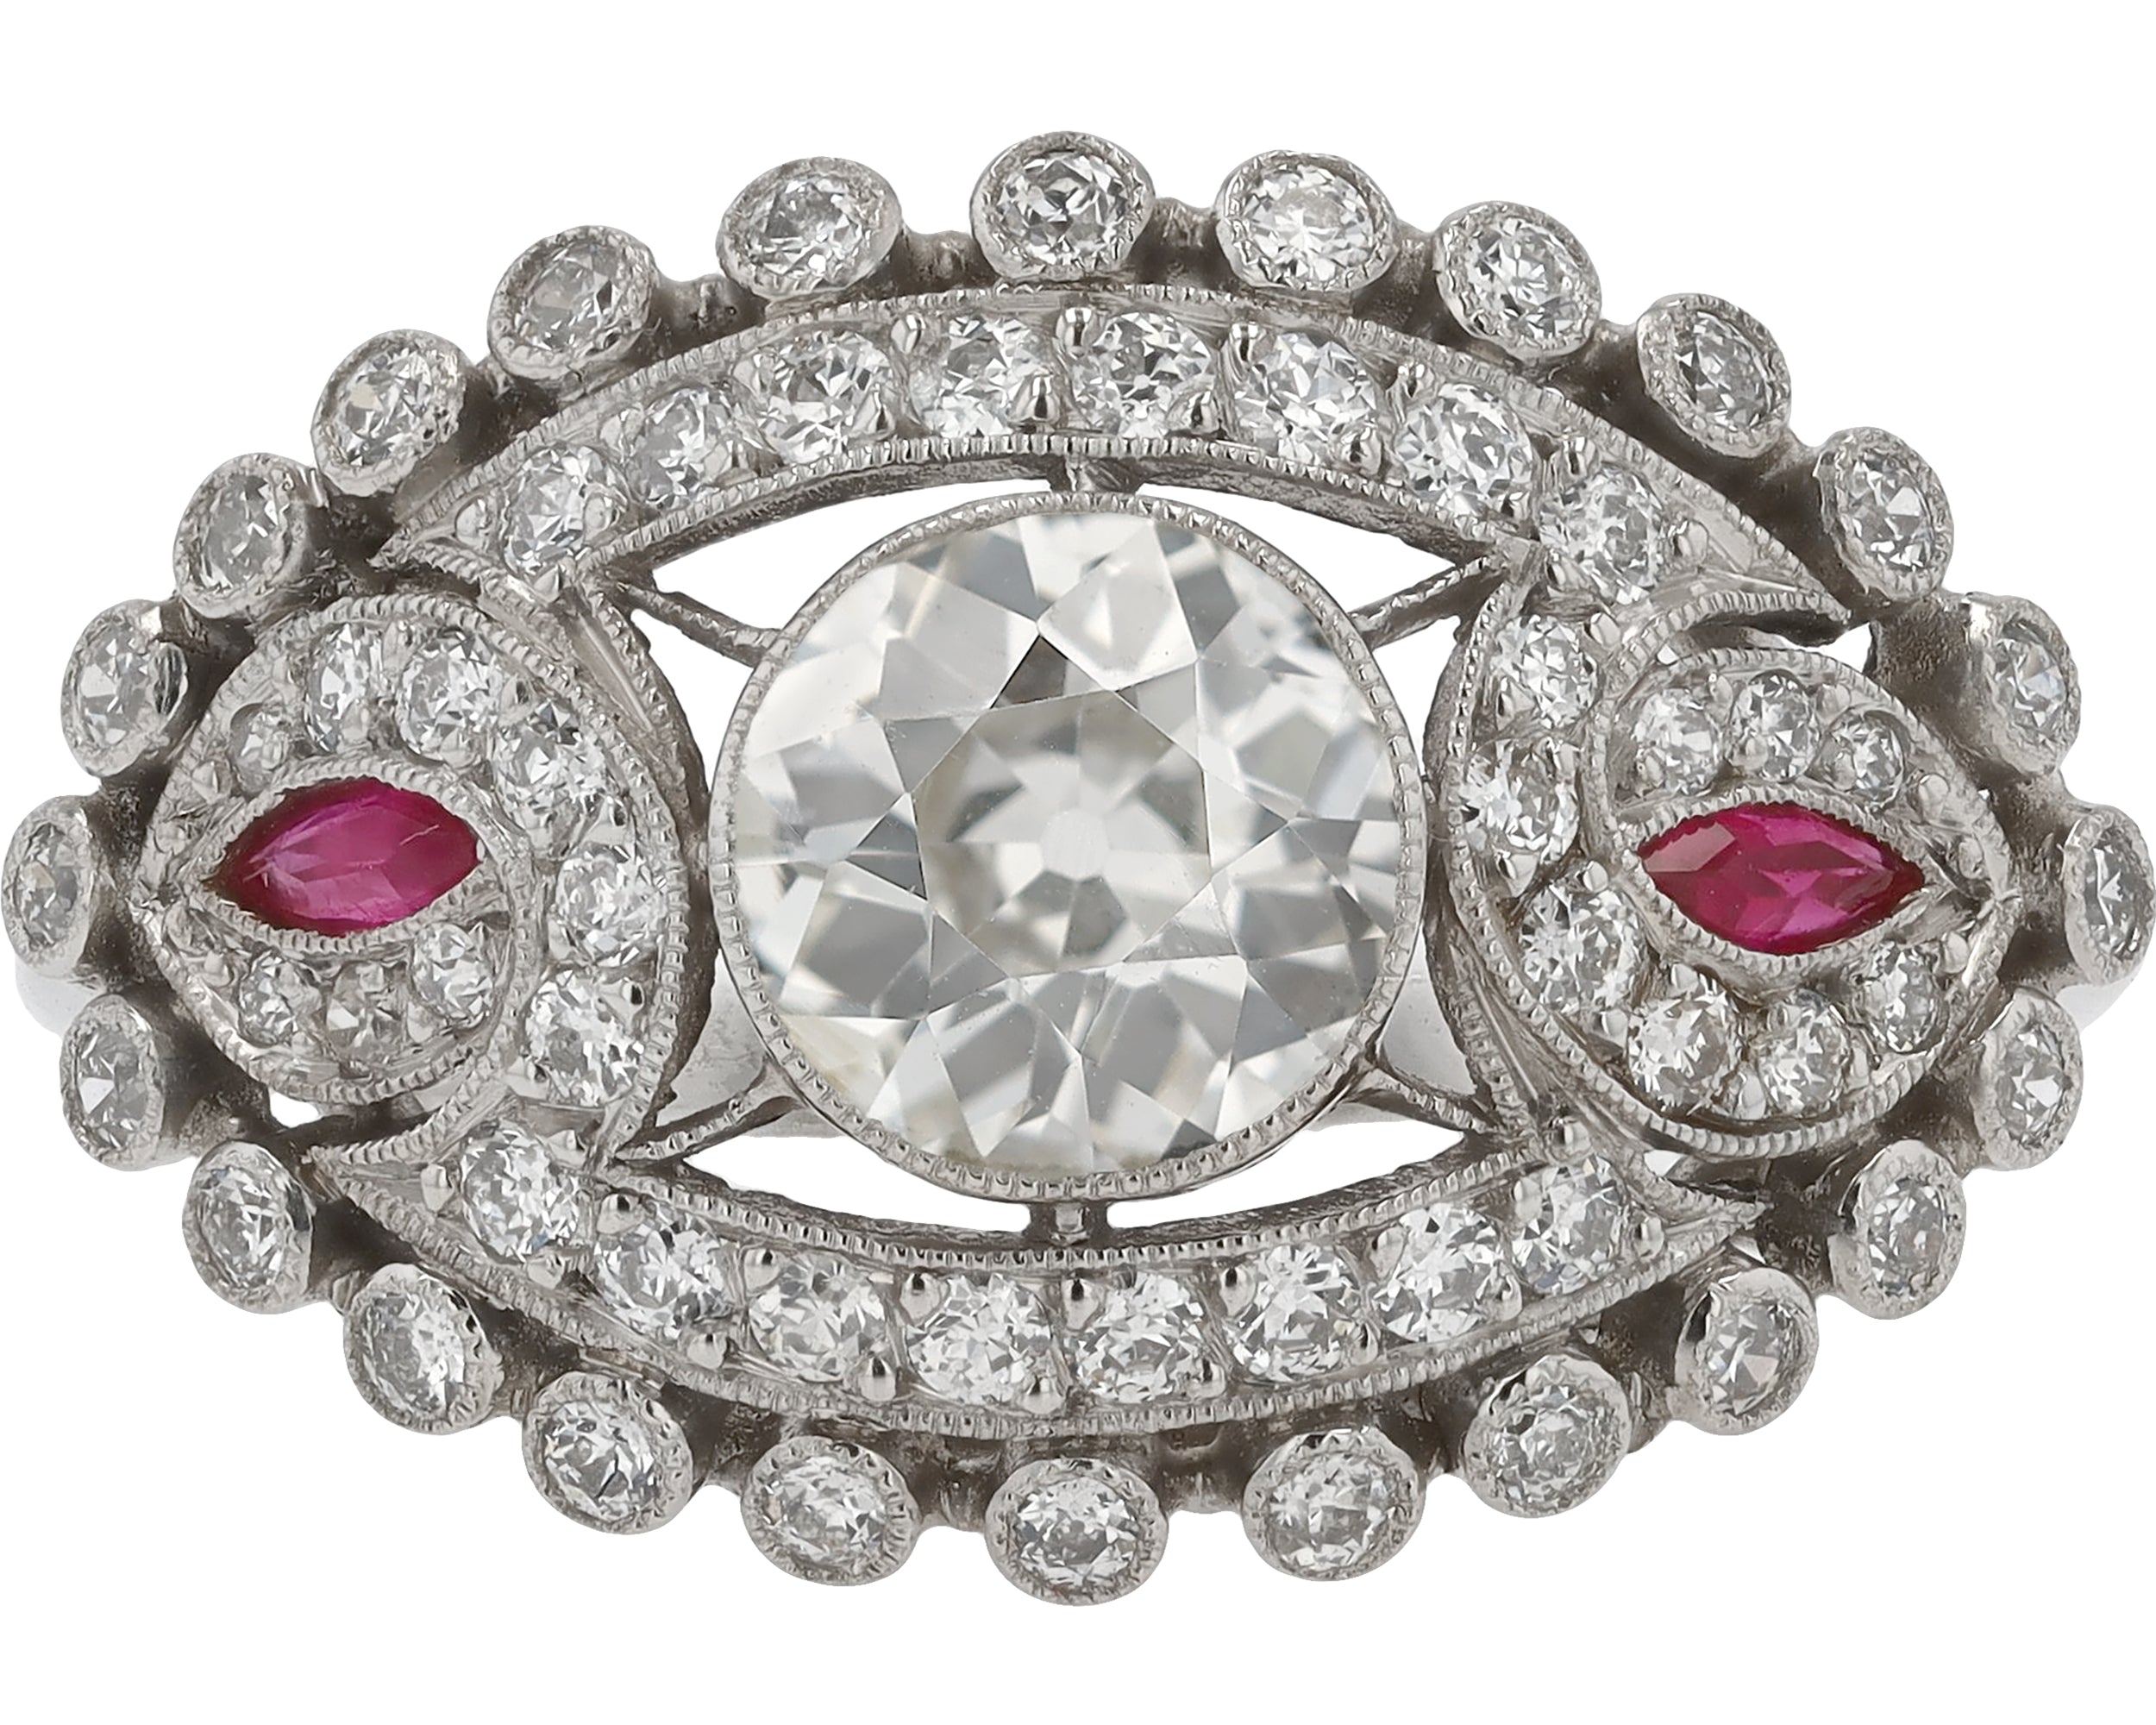 Antique Art Deco 1.12 Carat Old Mine Diamond Engagement Ring